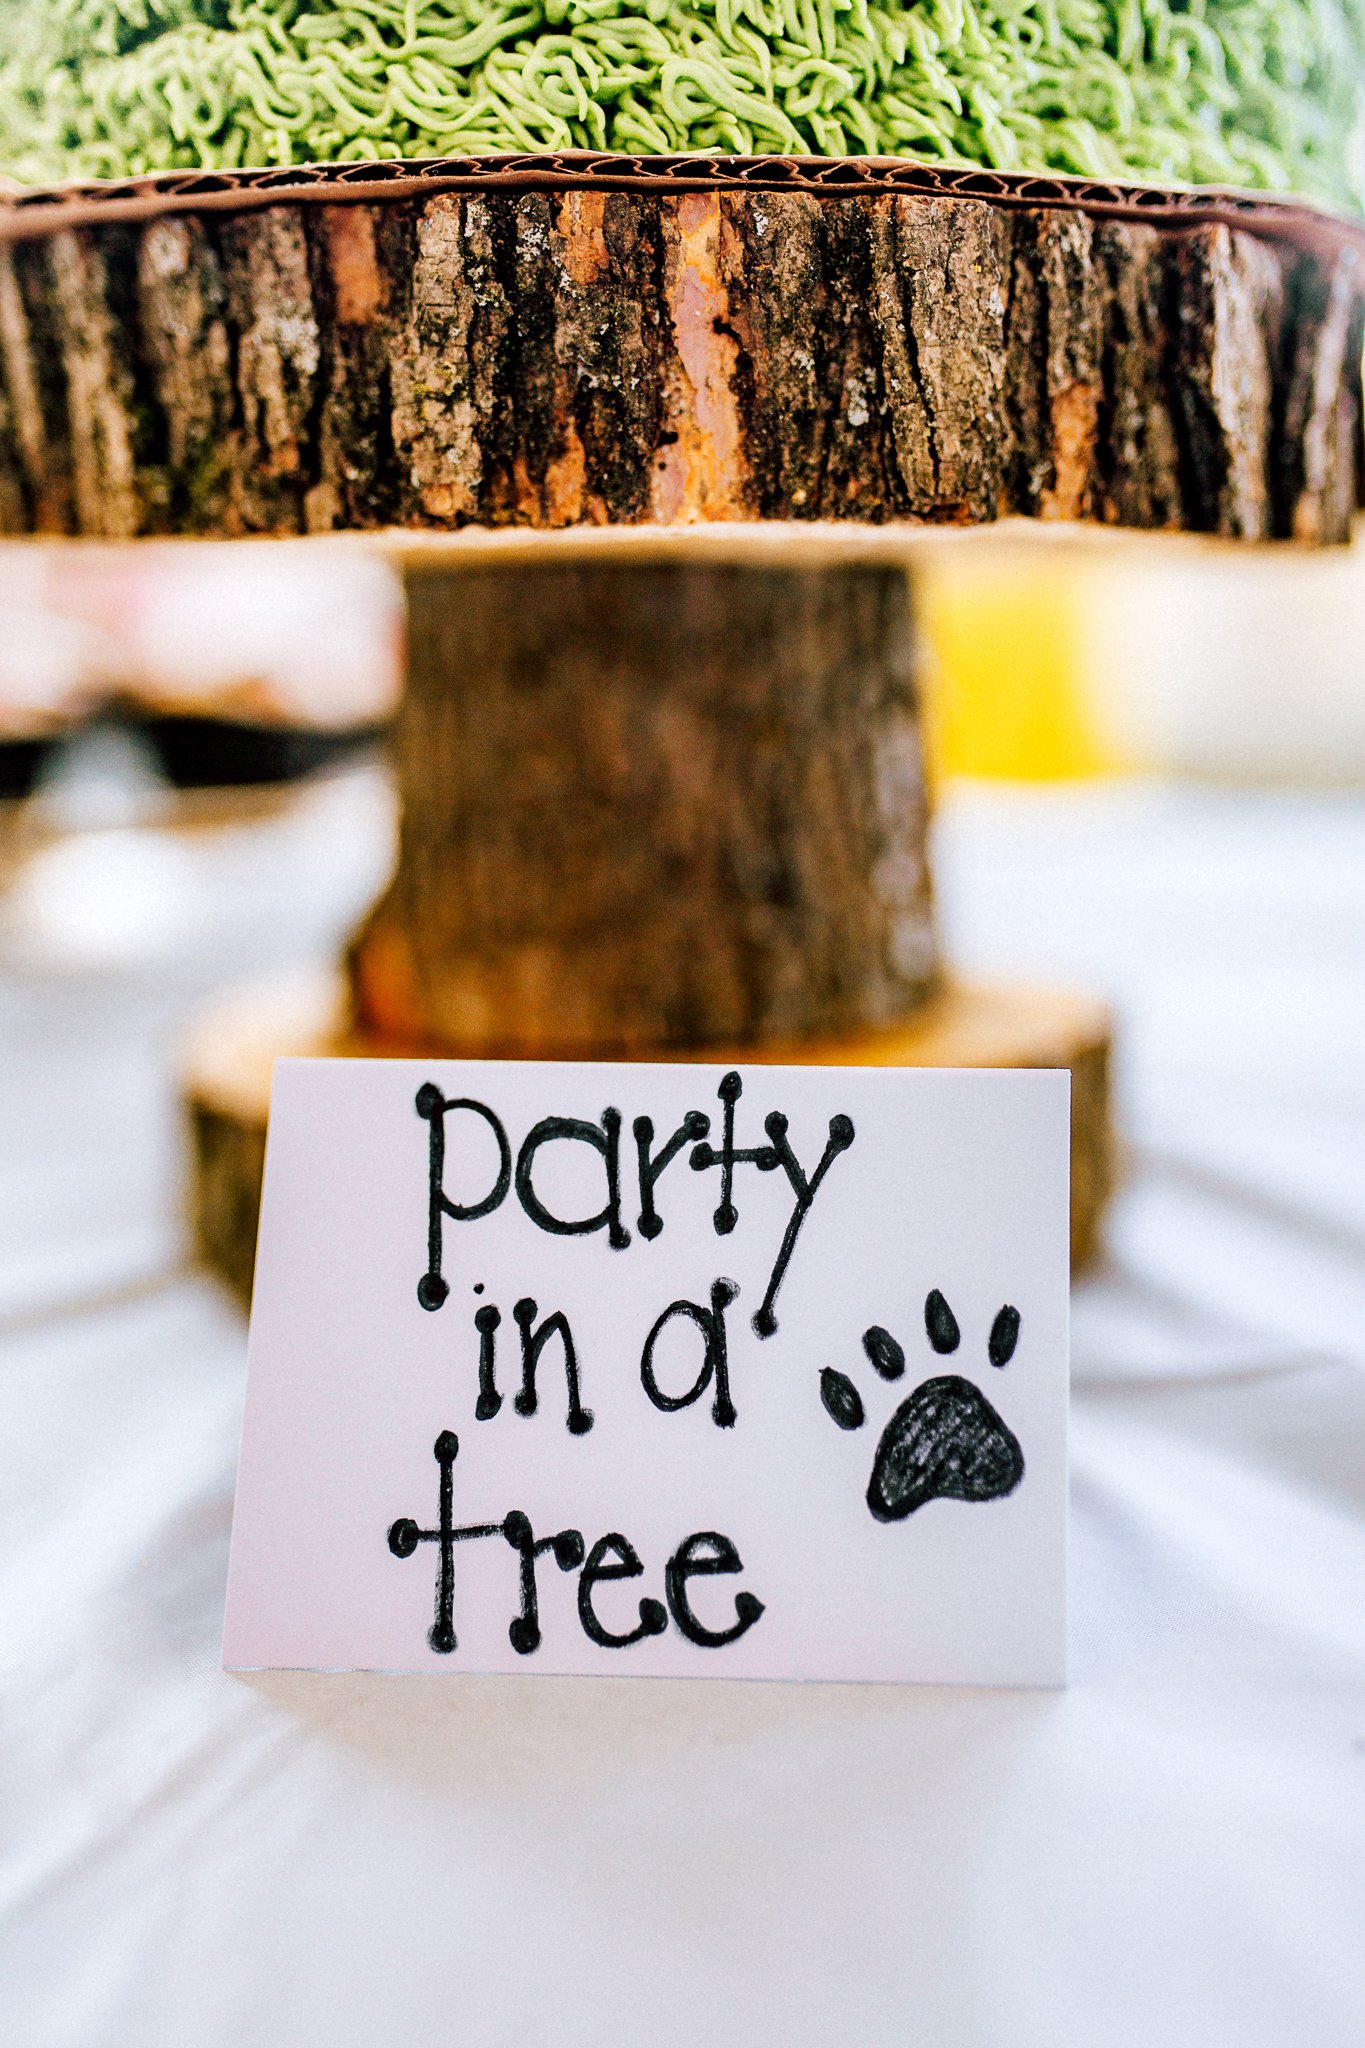 Go Dog Go Birthday Party | 2nd Birthday | Jonesboro, Arkansas Photographer